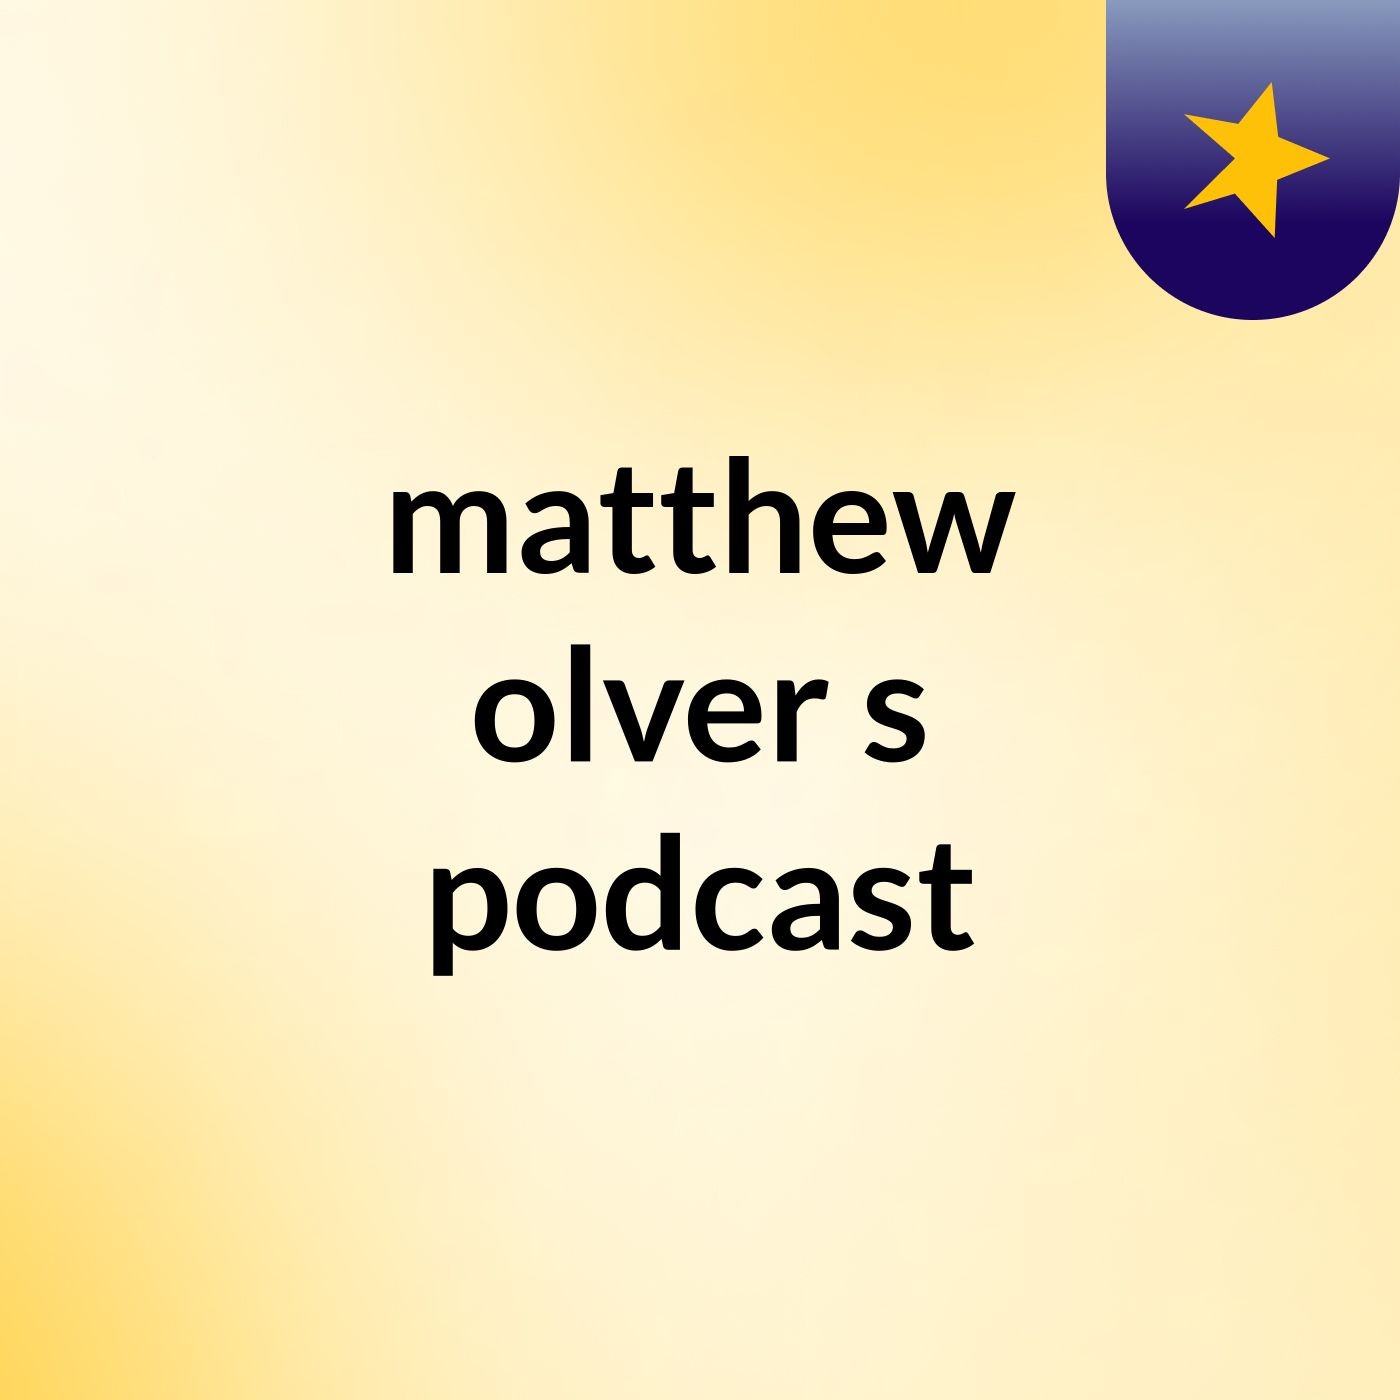 Episode 2 - matthew olver's podcast